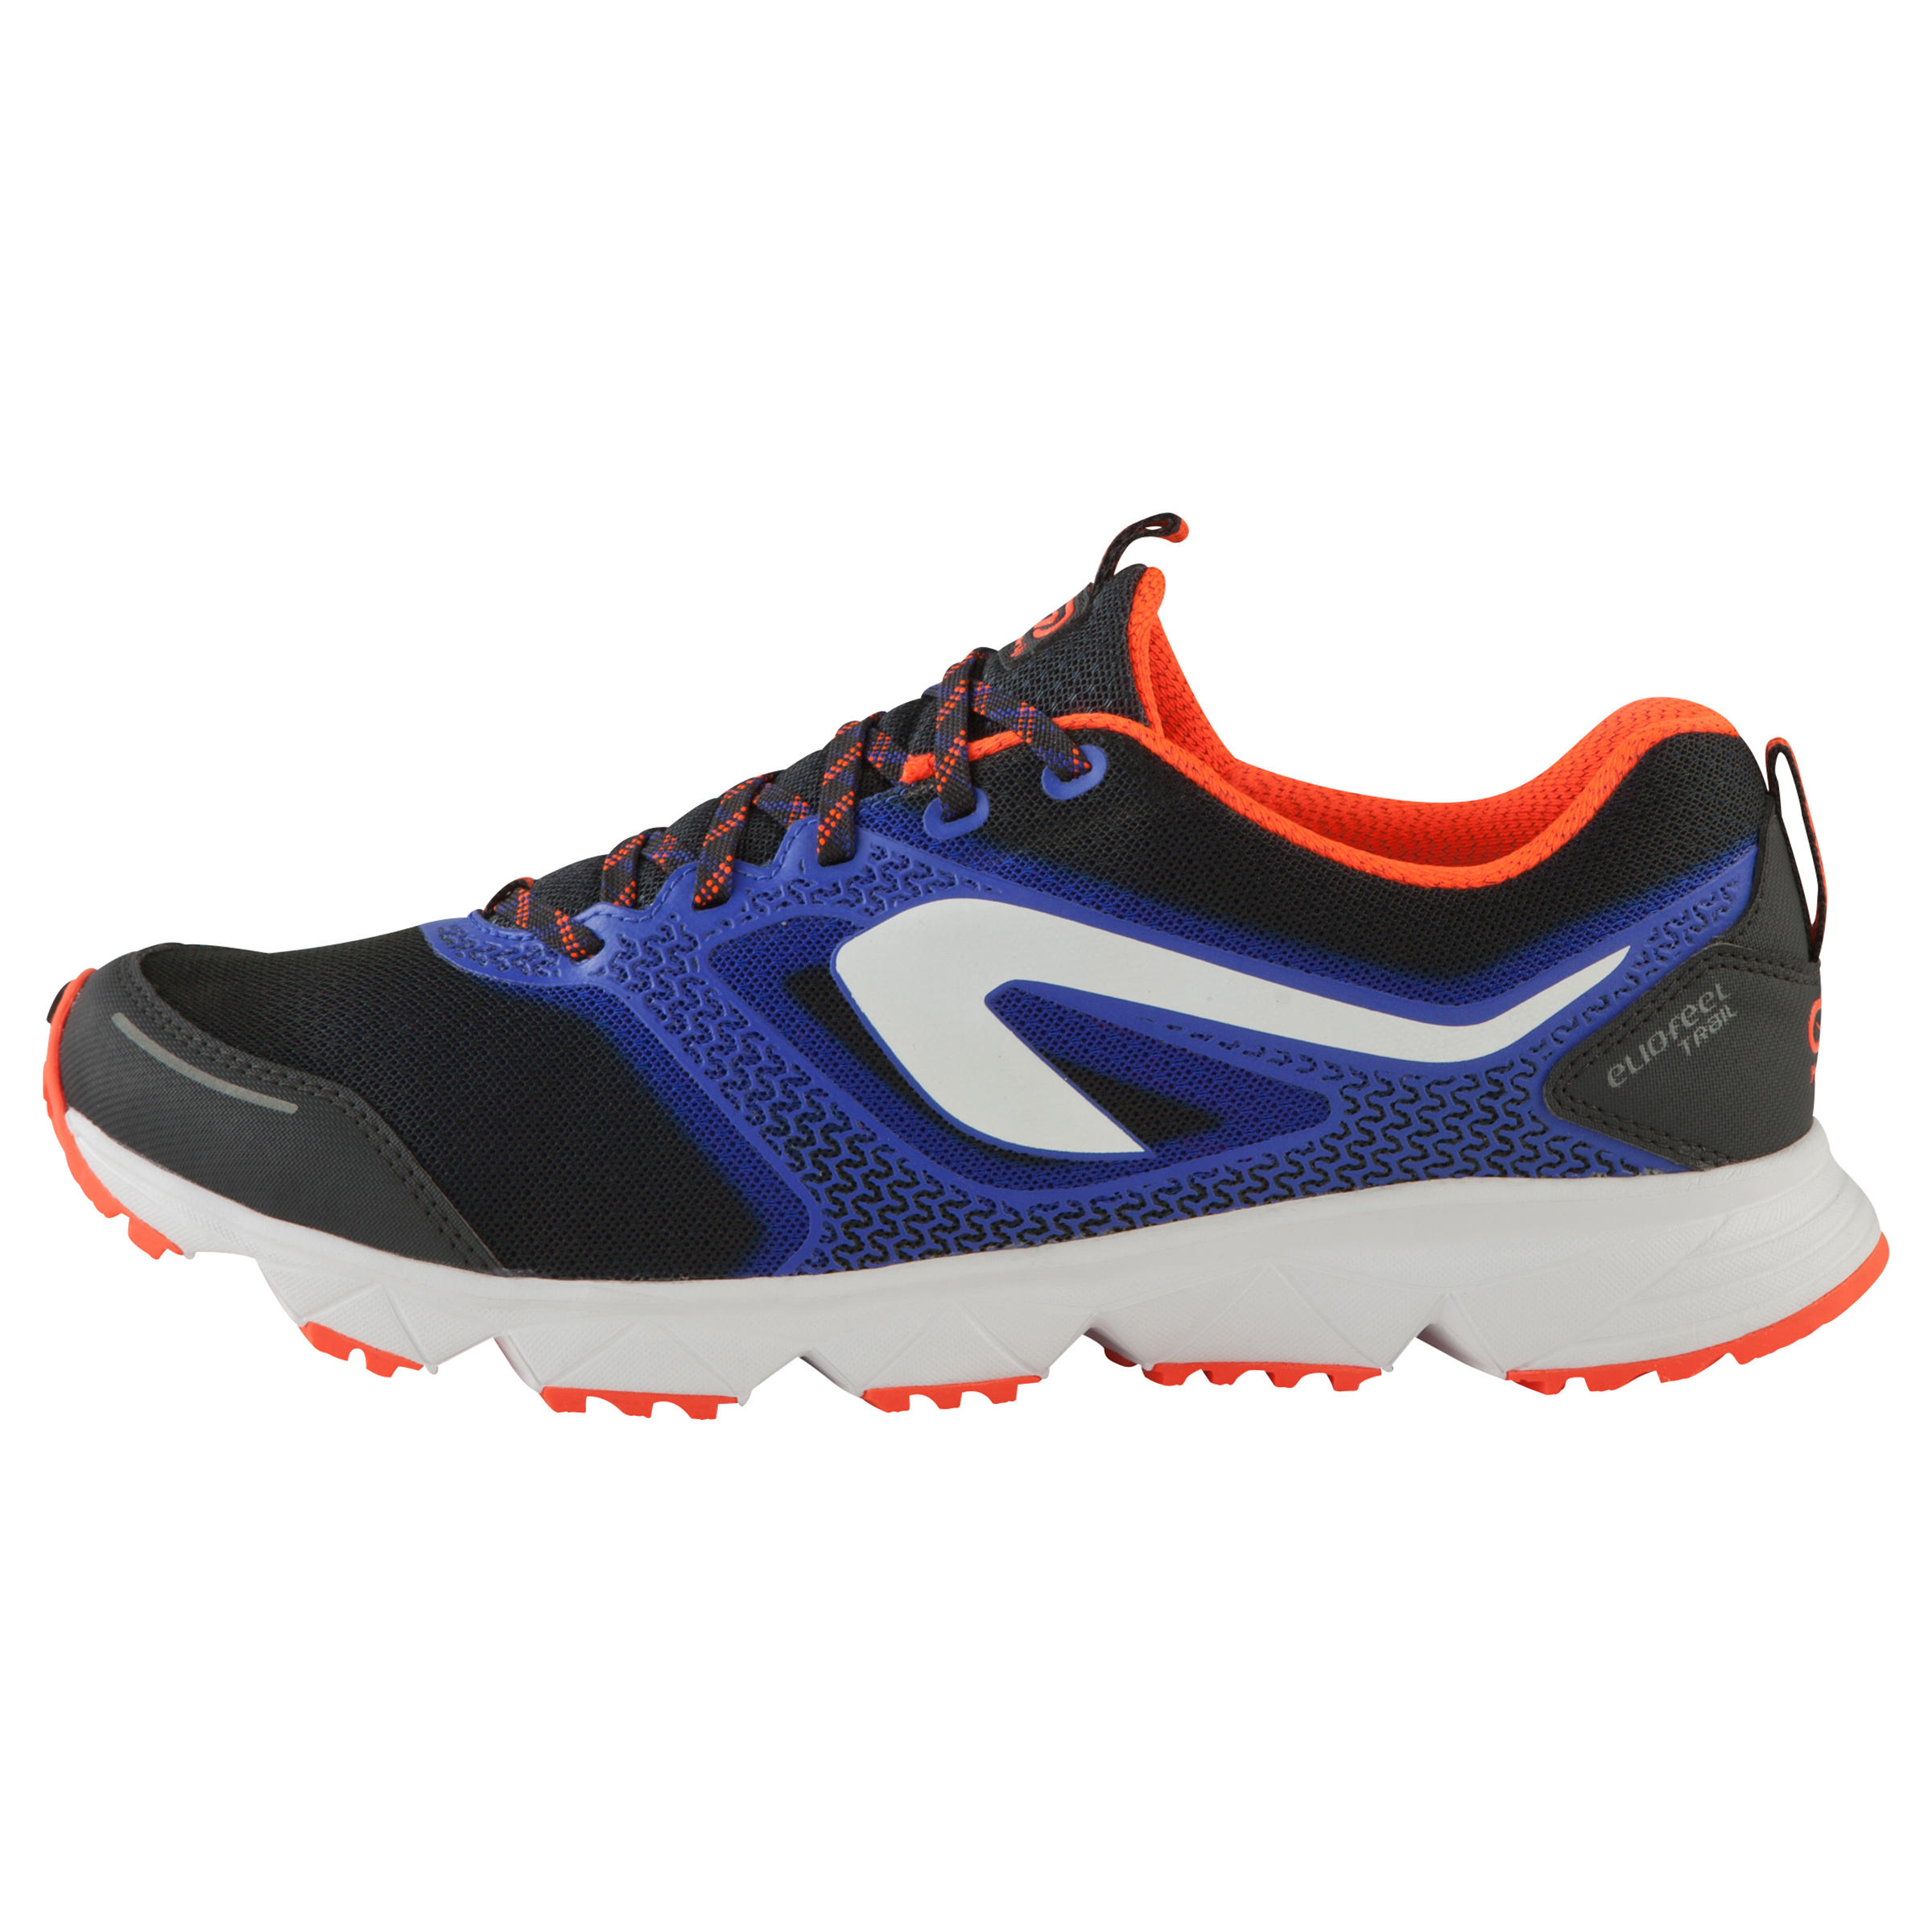 Kalenji Elio Feel Trail Men's Trail Running Shoes - Blue 7/16